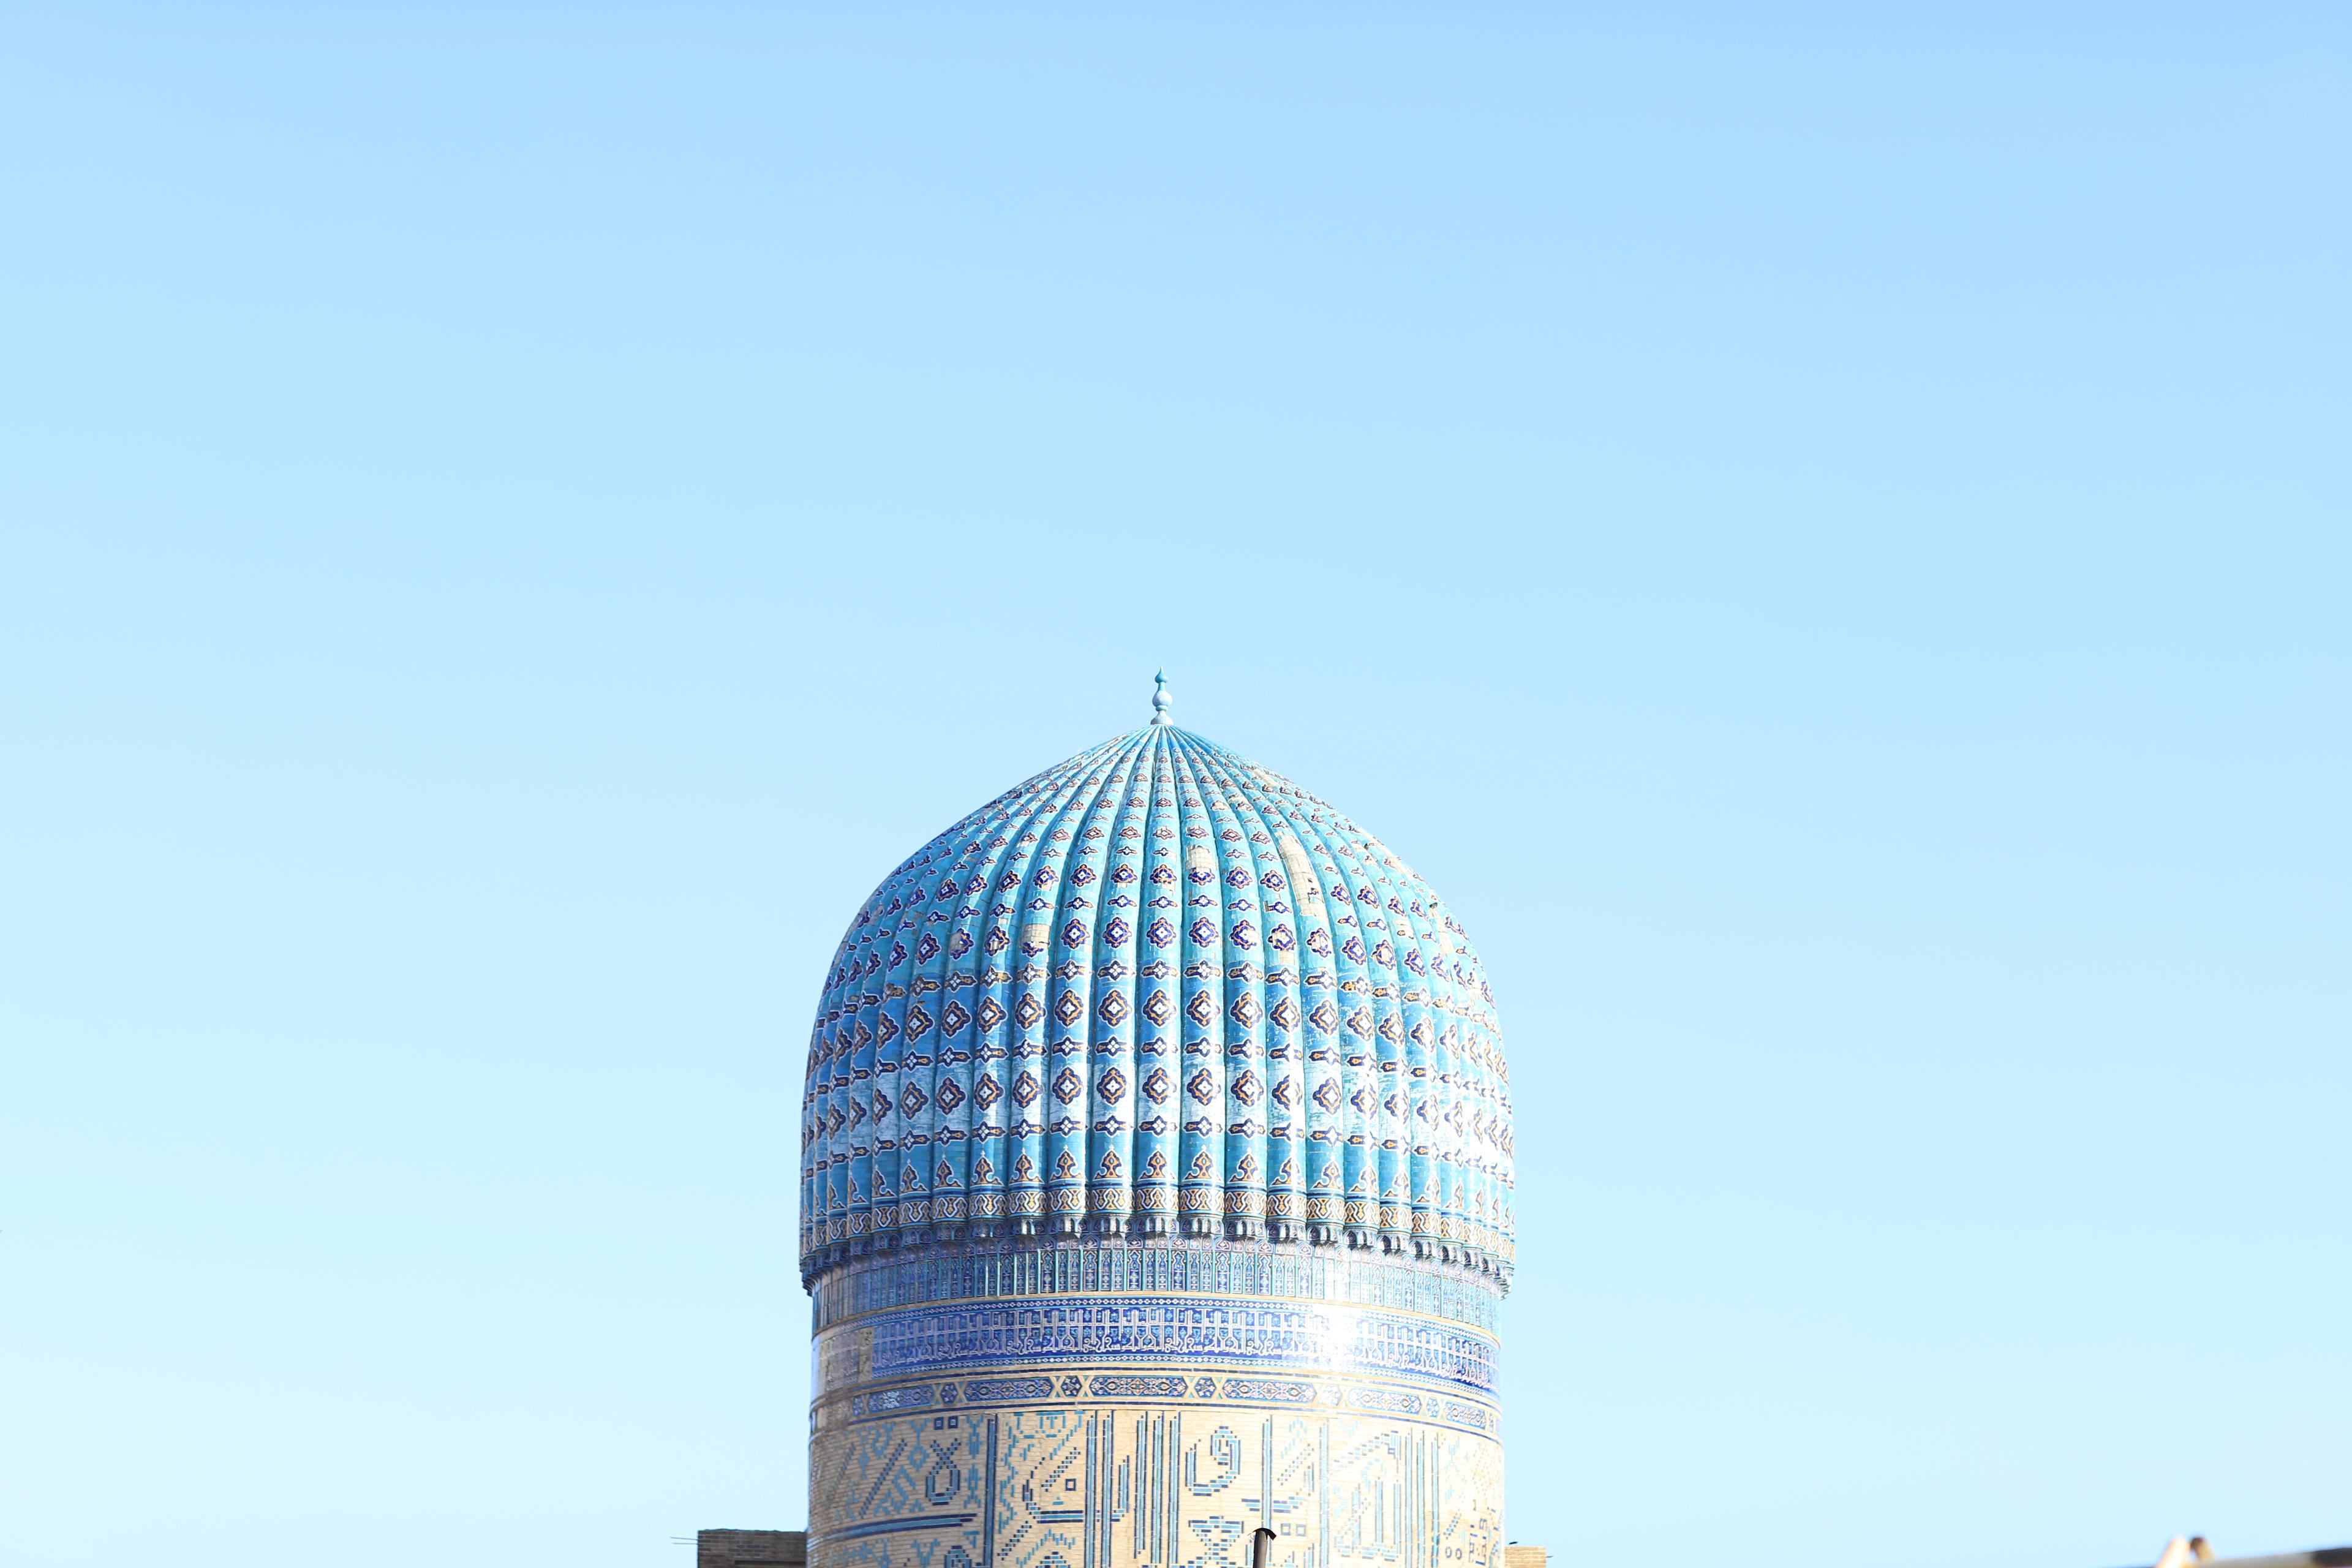 Cover image of this place Gur Emir Mausoleum